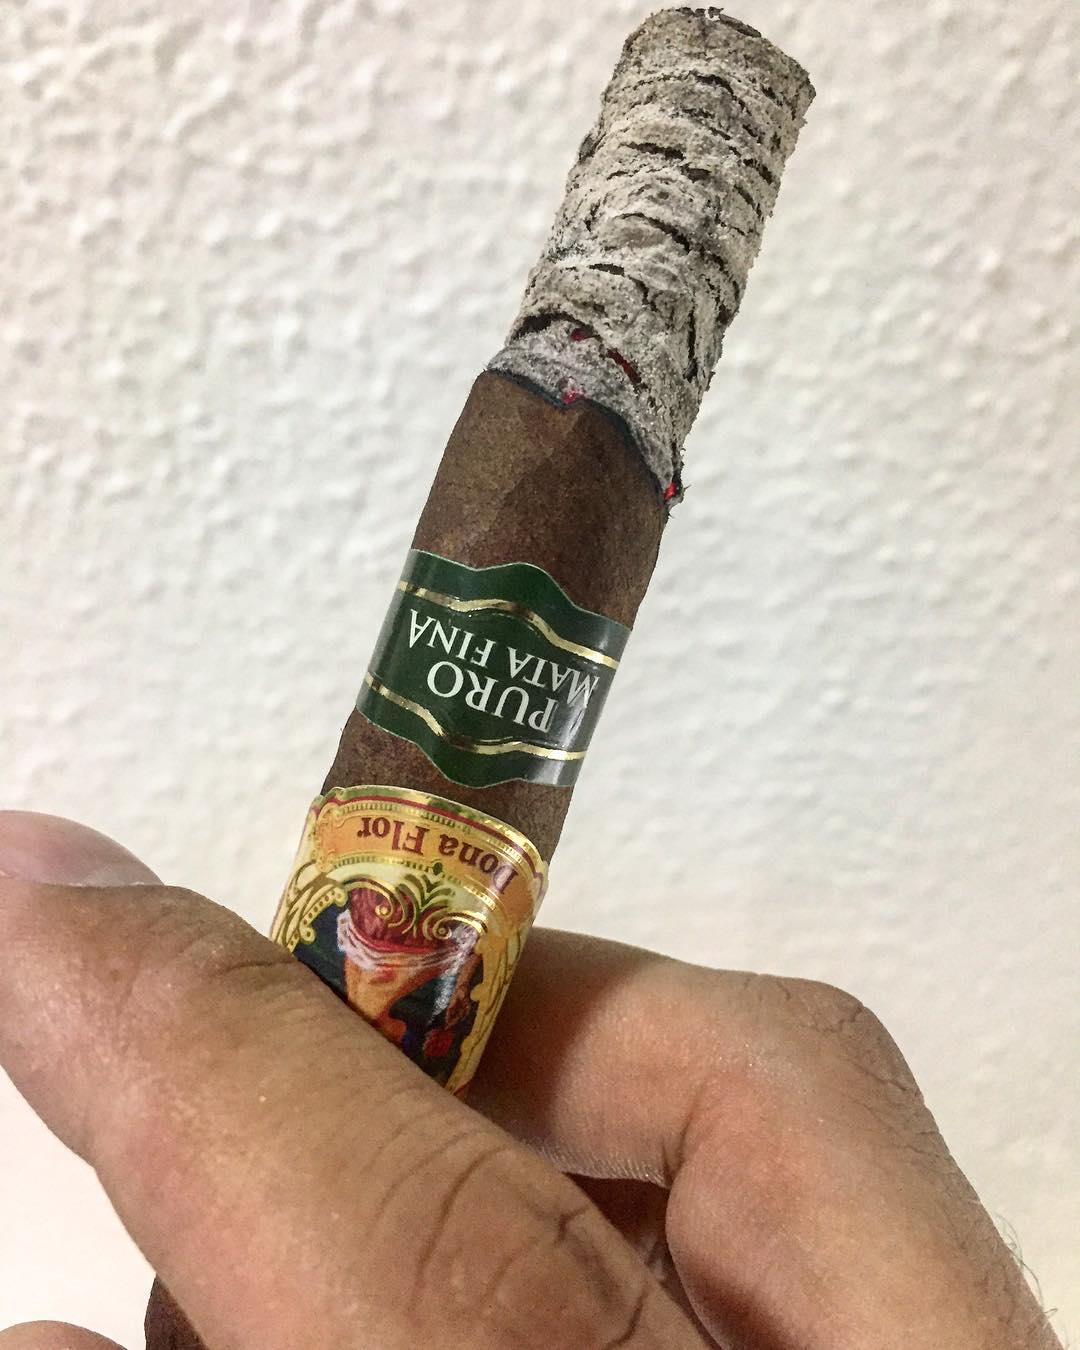 Altamente Recomendado #cigar #charuto #donaflor #puromatafina #robusto